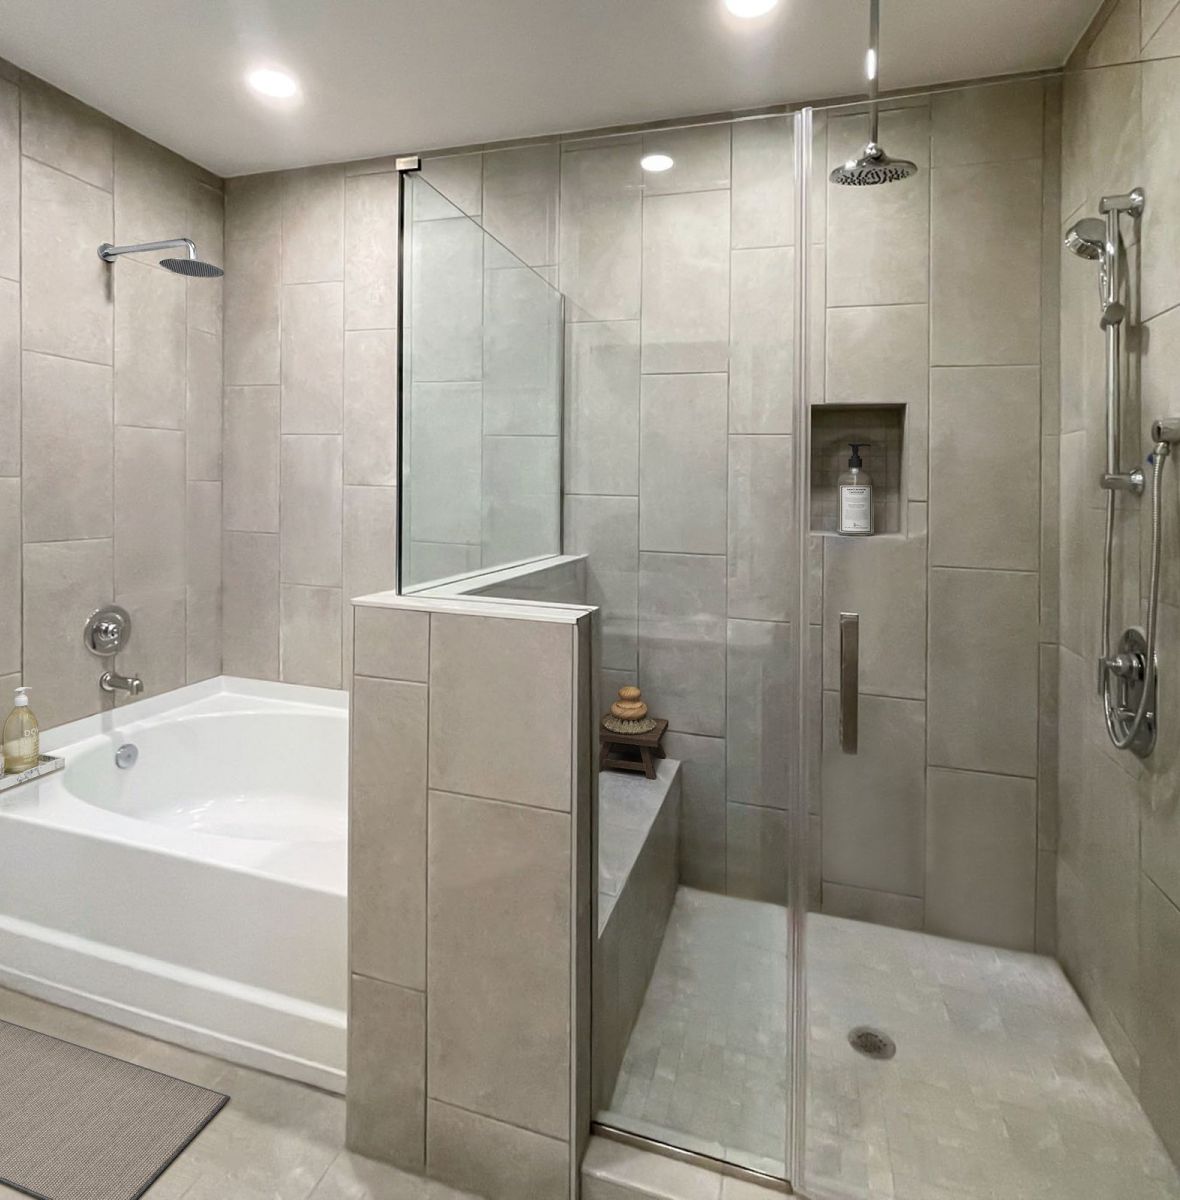 Luxury apartment bathroom with frameless glass shower, rain showerheads, and tub